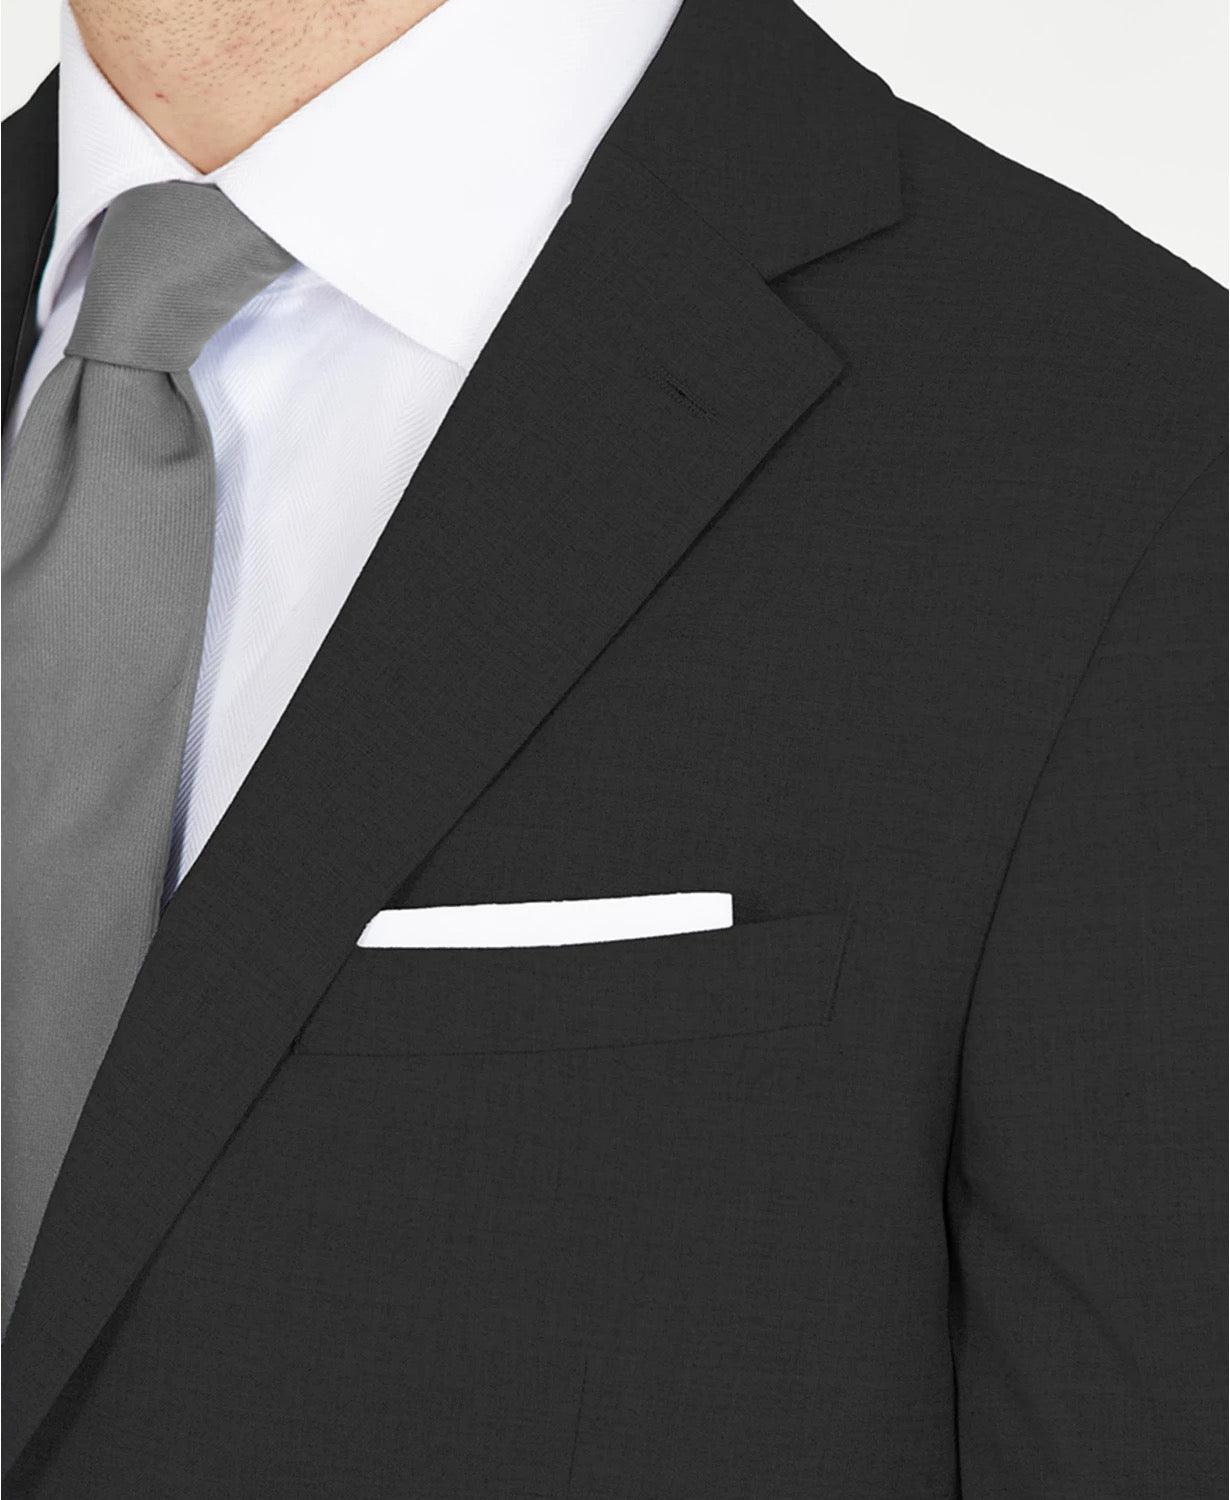 DKNY Men's Suit Jacket Black 42L Modern-Fit Stretch Two Button - Bristol Apparel Co